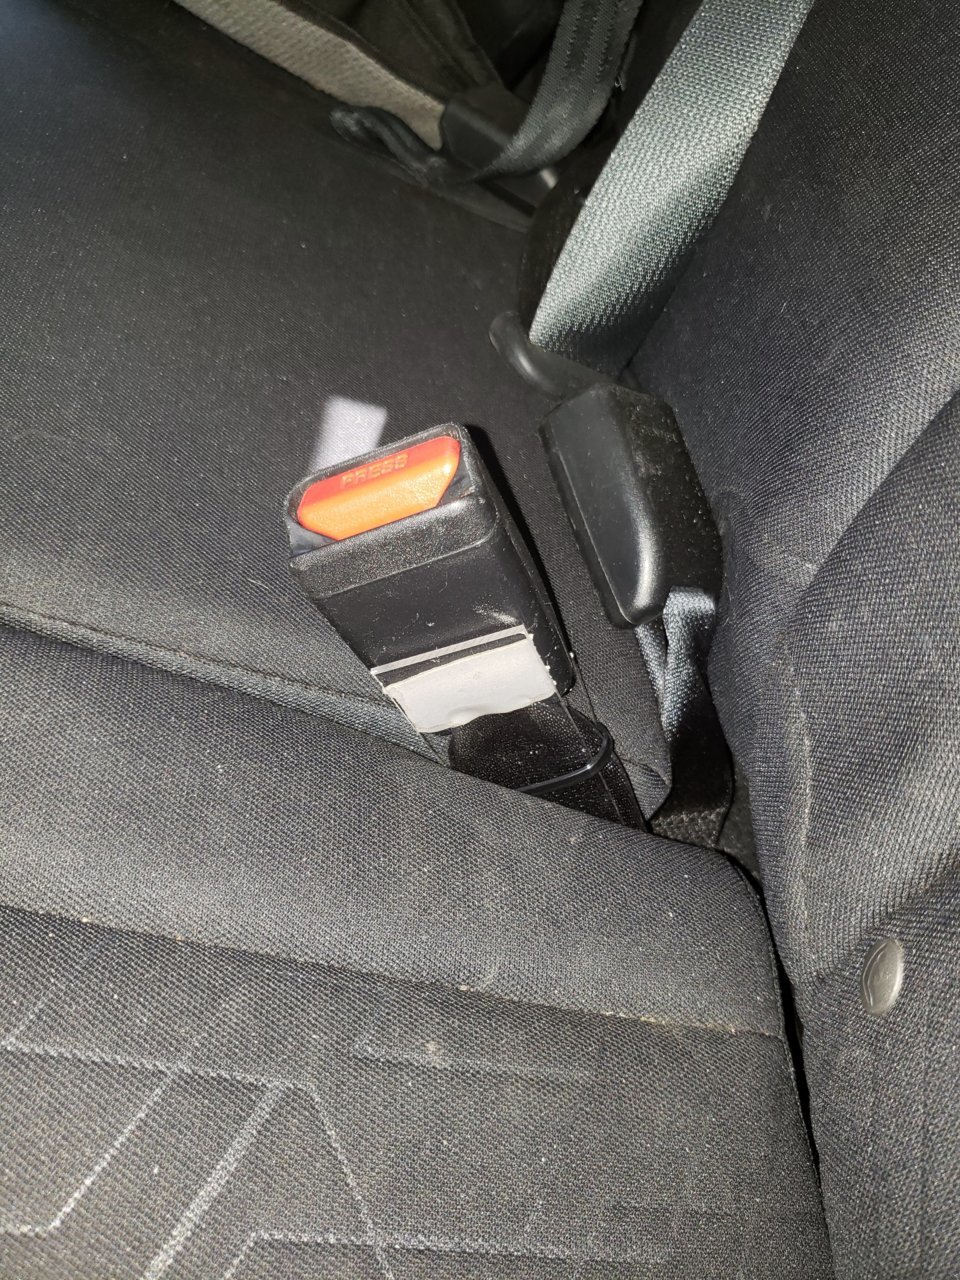 Tacoma seat belt stiffener.jpg